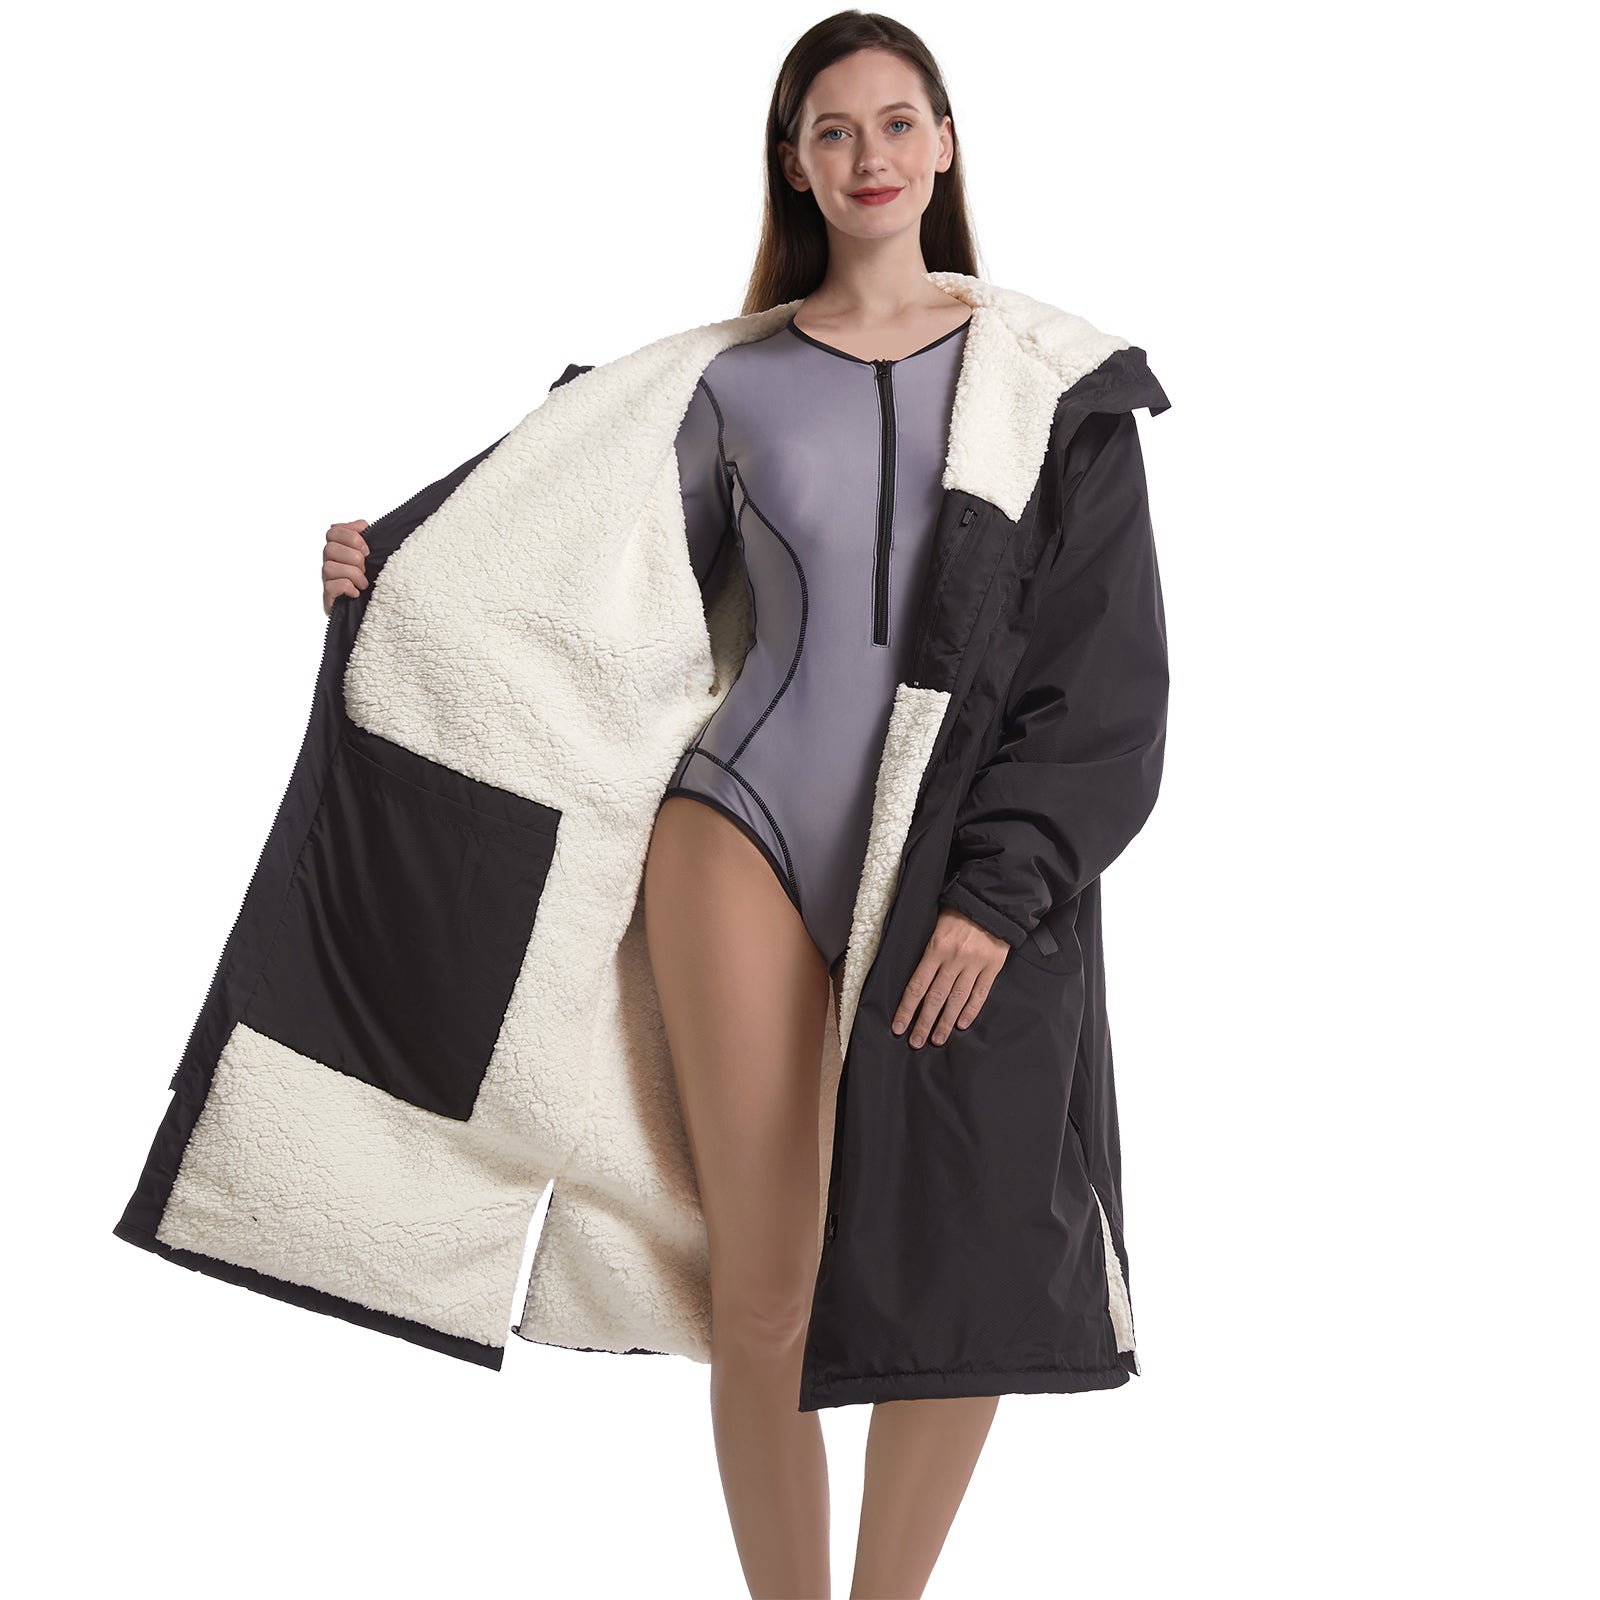 Adult Waterproof Bathrobe，Windproof Swim Parka Oversized Surf Poncho Hooded Warm Coat Fleece Lining